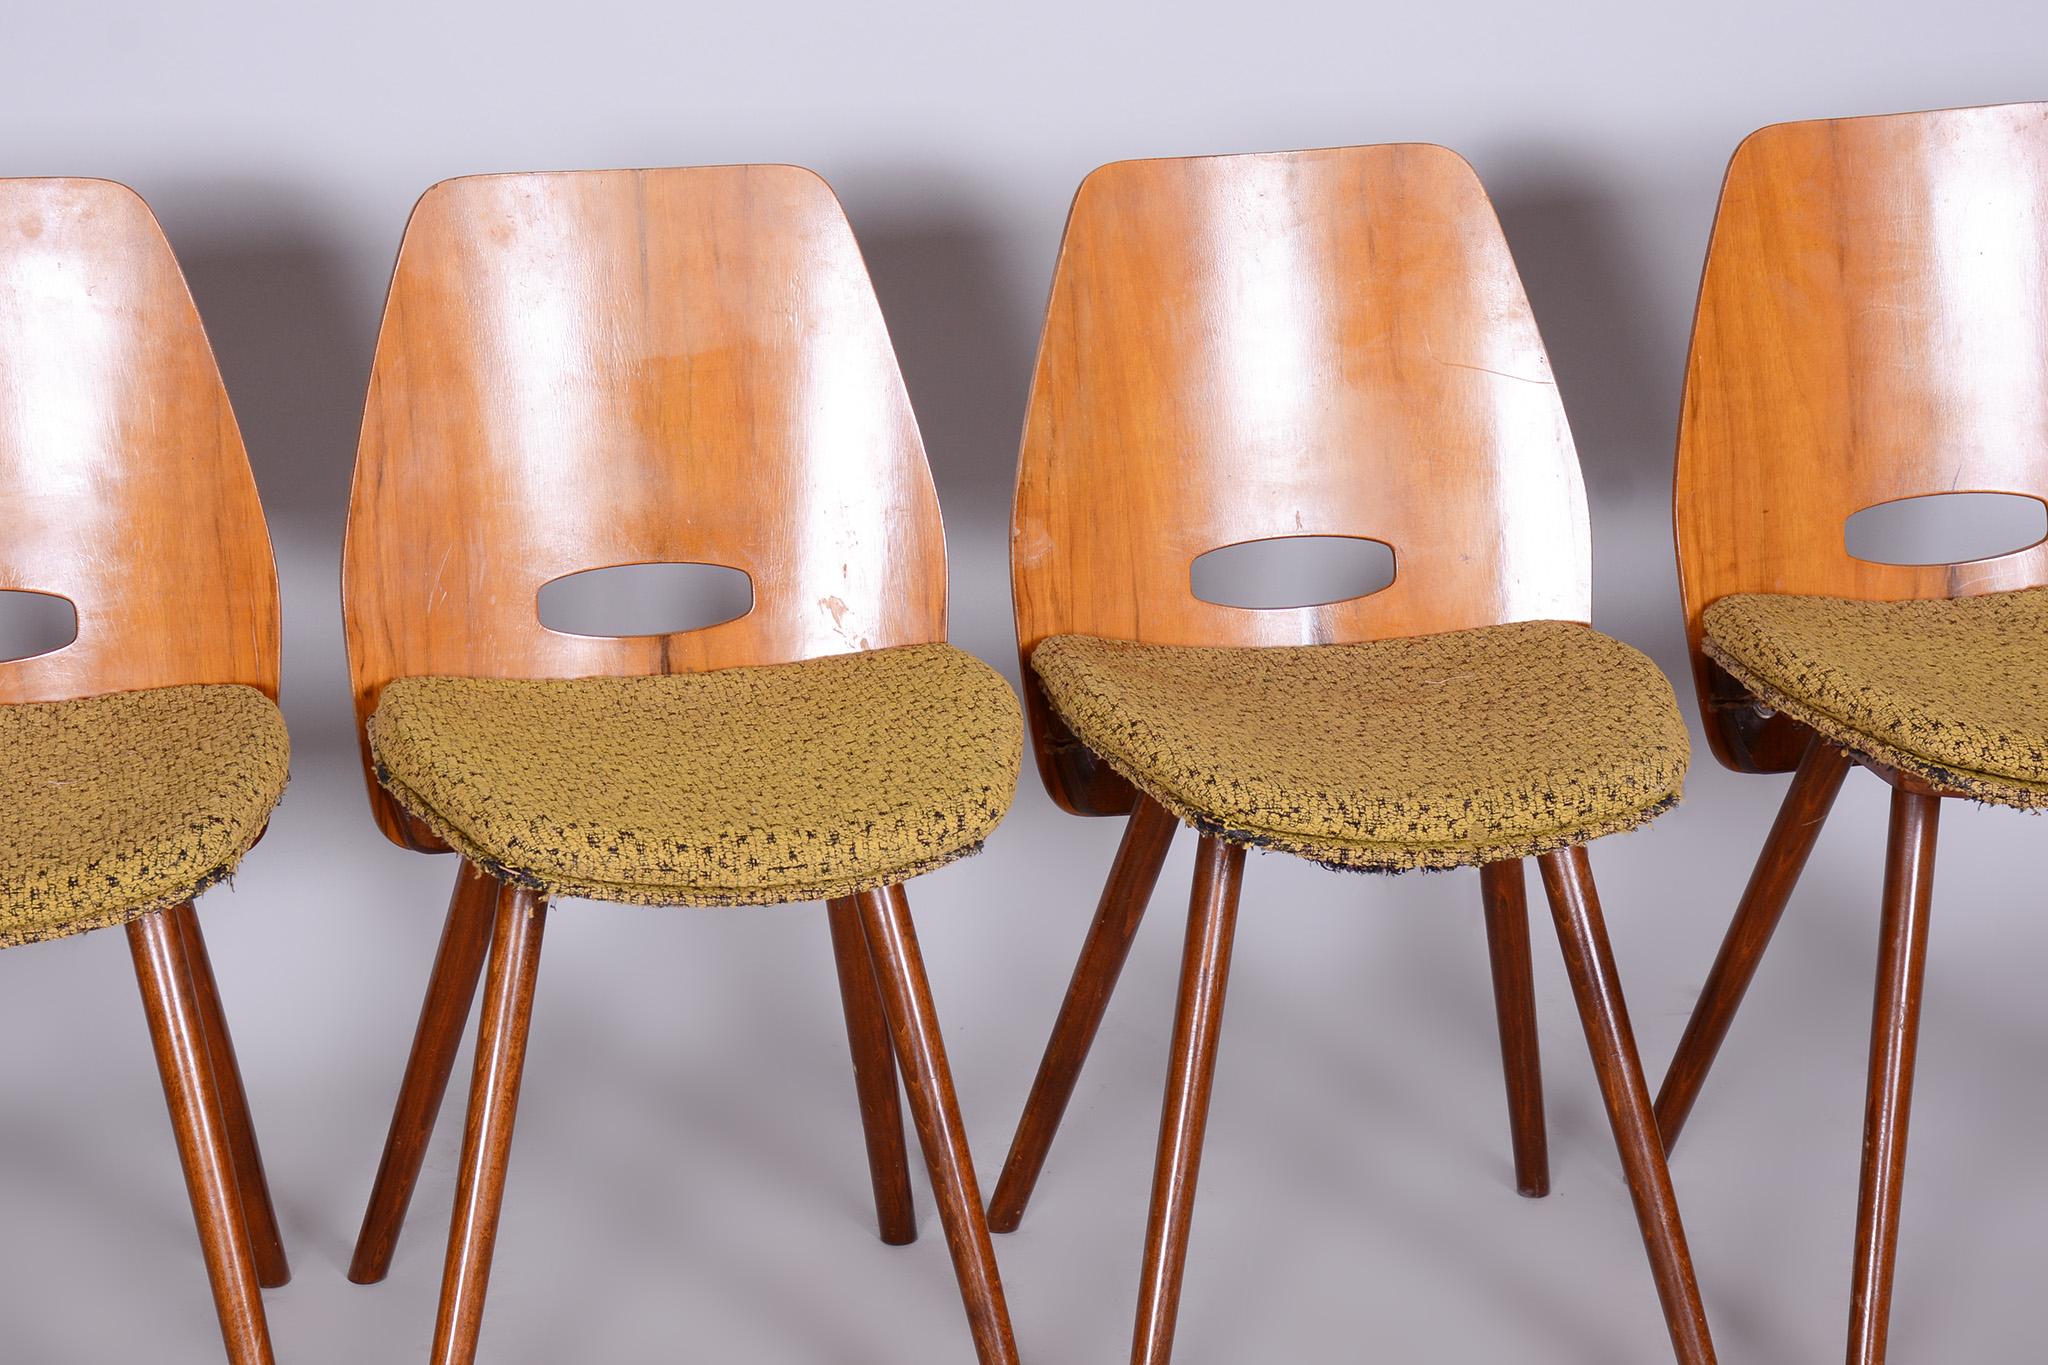 Original Set of Four midcentury walnut chairs by Frantisek Jirak.

Maker: Tatra Nabytok n.p.
Period: 1950-1959
Source: Czechia
Material: Walnut 

Original well-preserved condition. Cleaned upholstery.